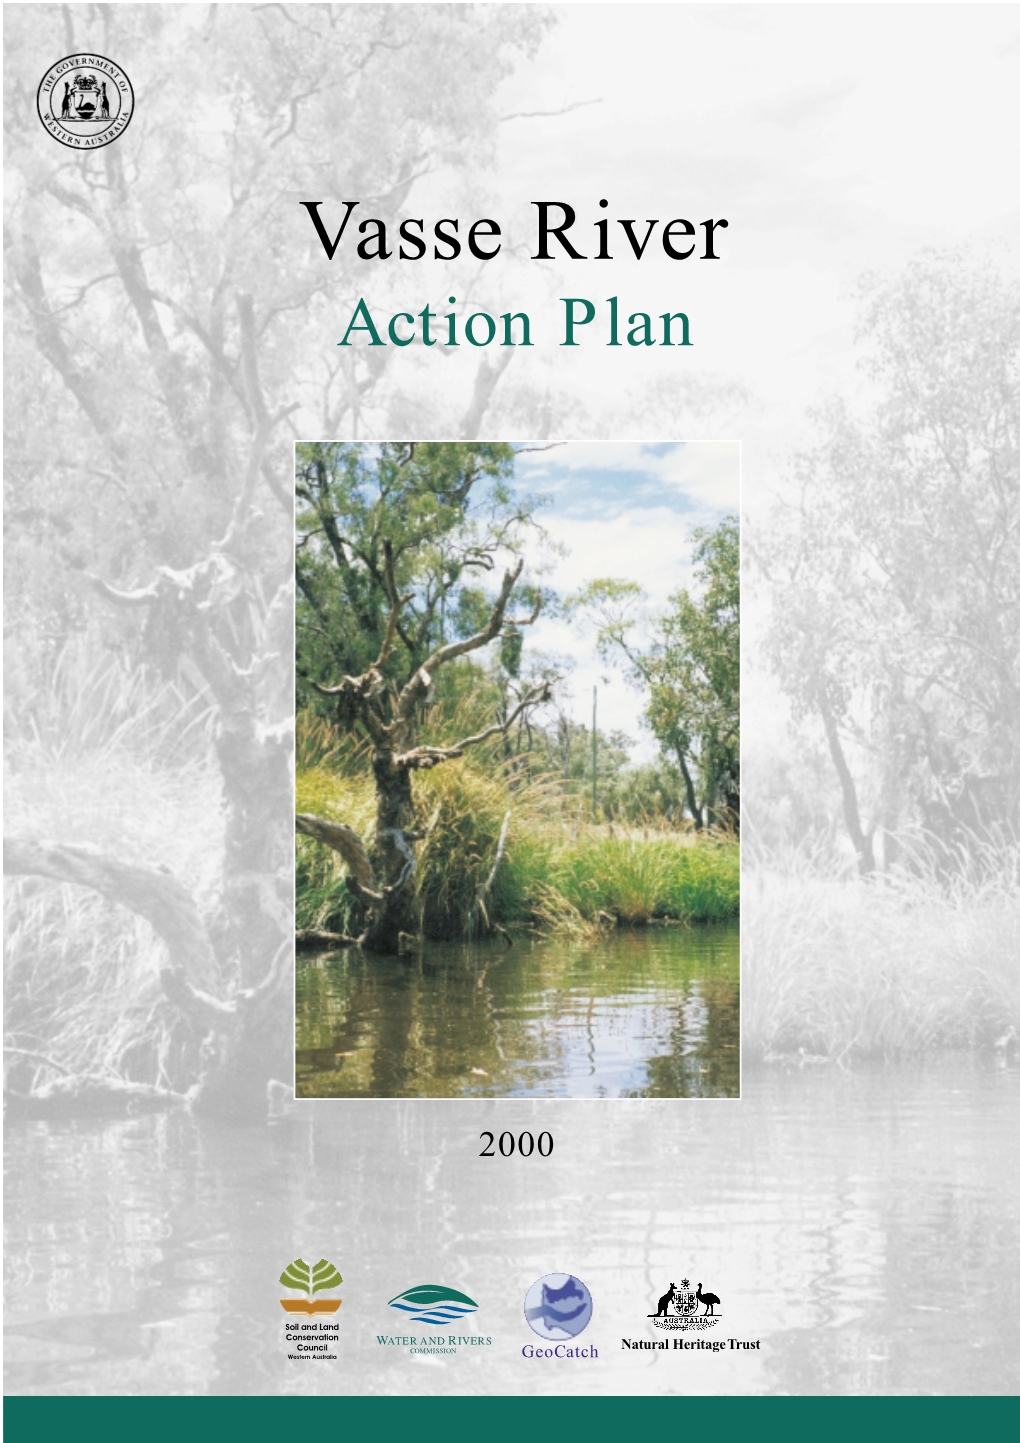 Vasse River Action Plan